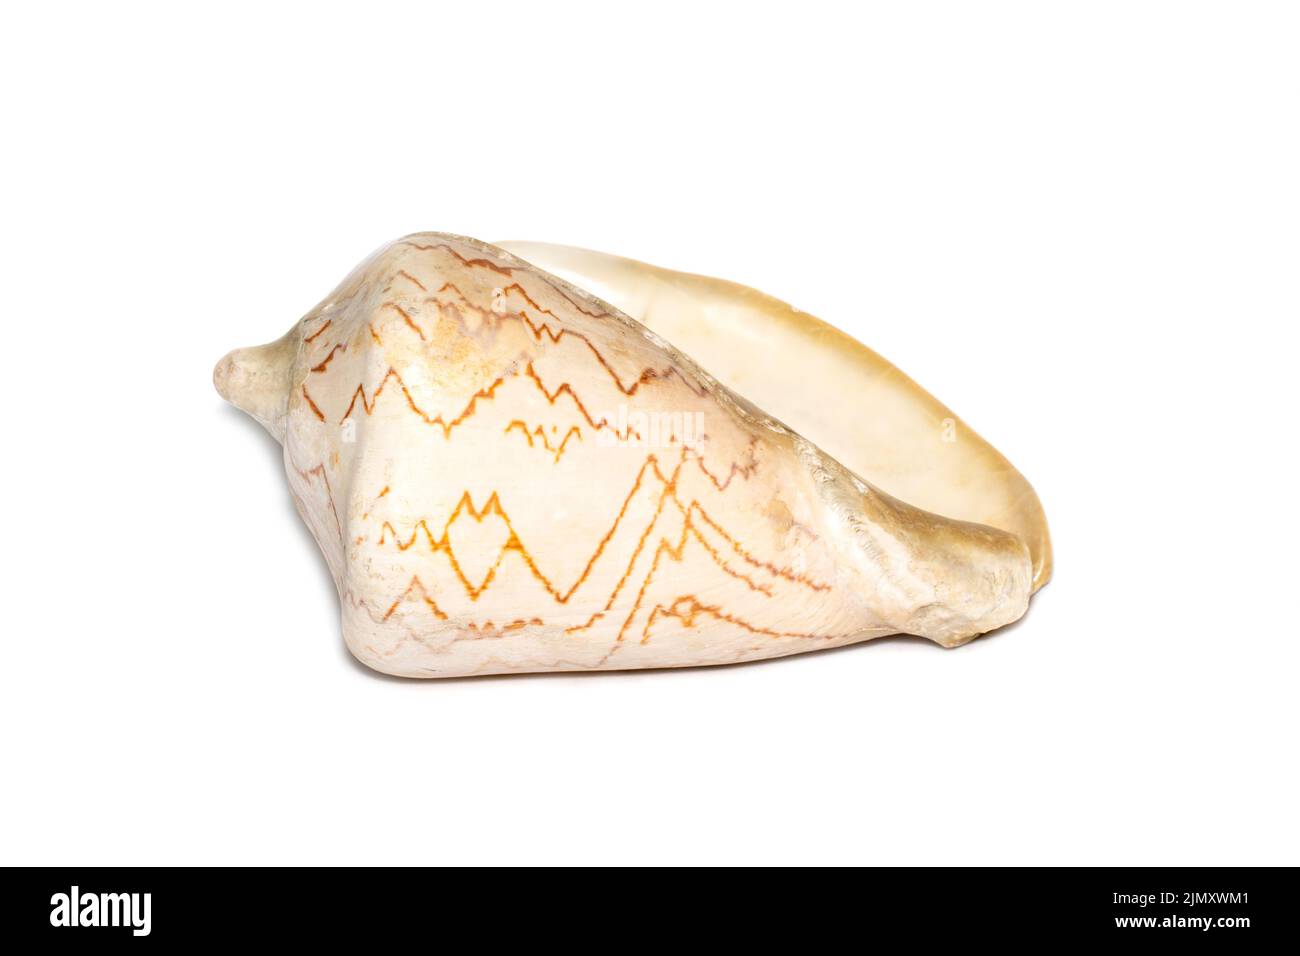 Image of andaman seashell (cymbiola nobilis) on a white background. Undersea Animals. Sea shells. Stock Photo